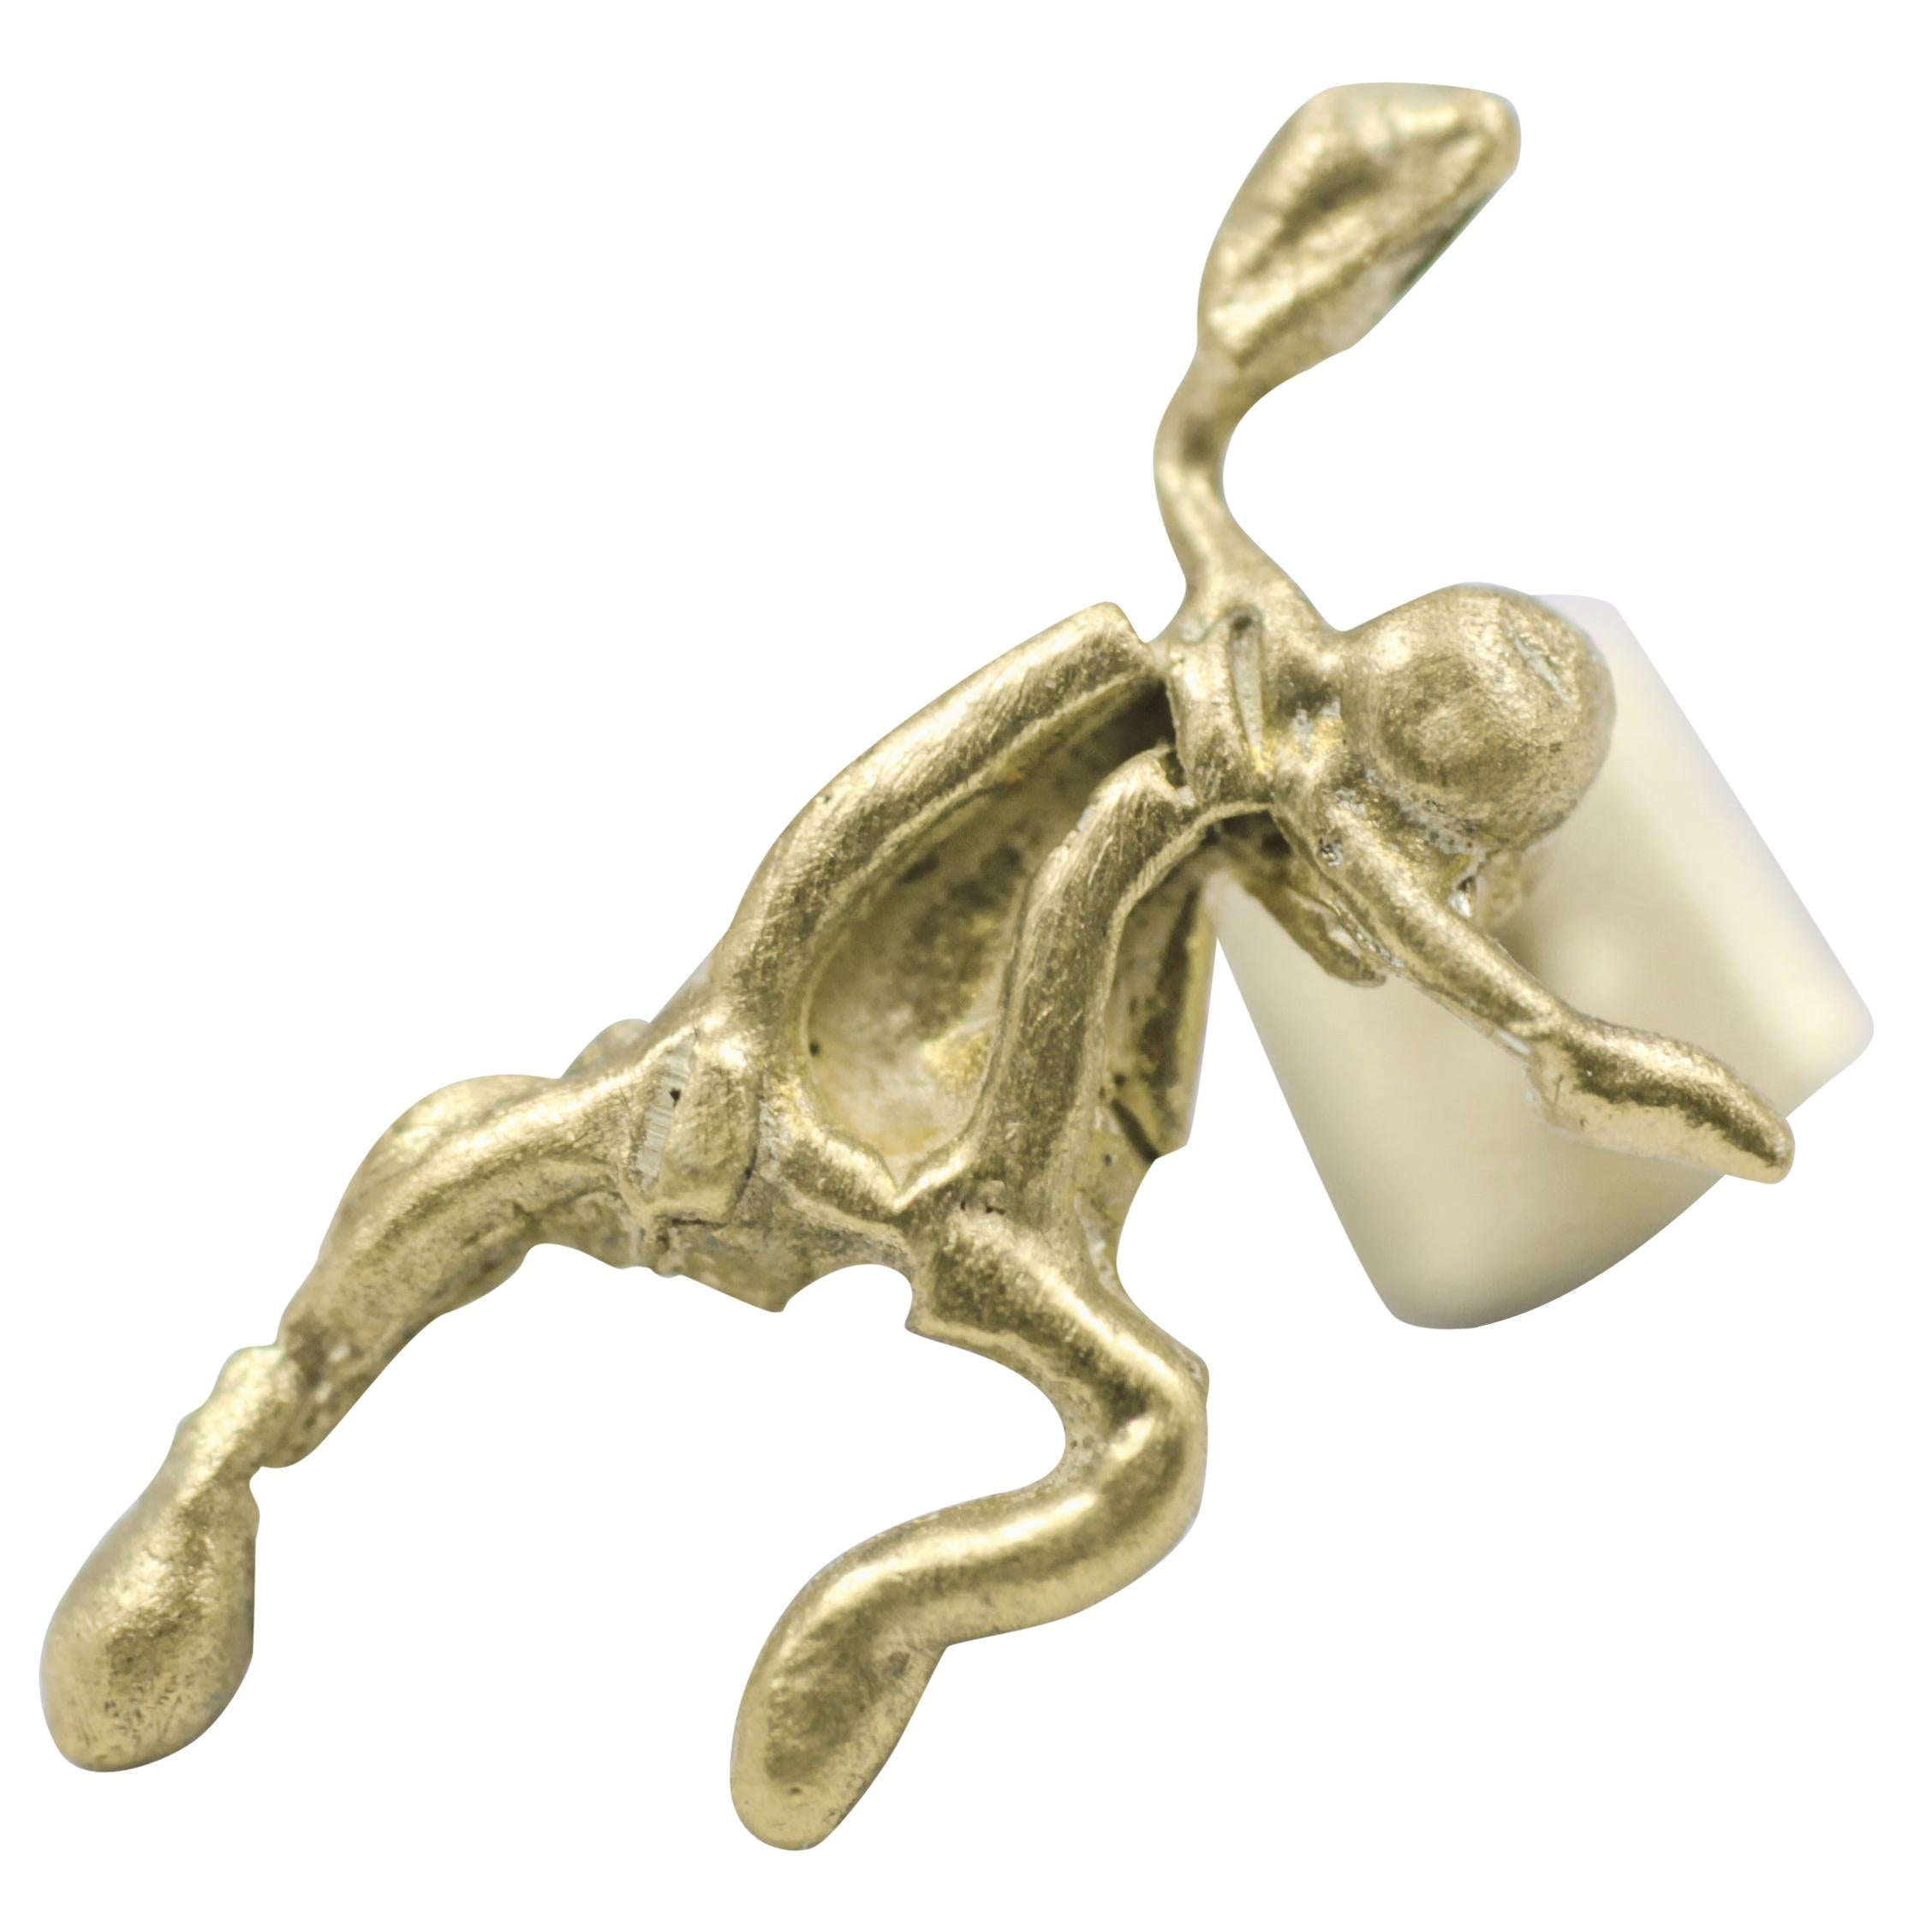 Single 18Karat Gold Stud Figurine Earring Minimalist Asymmetric Modern Sculpture